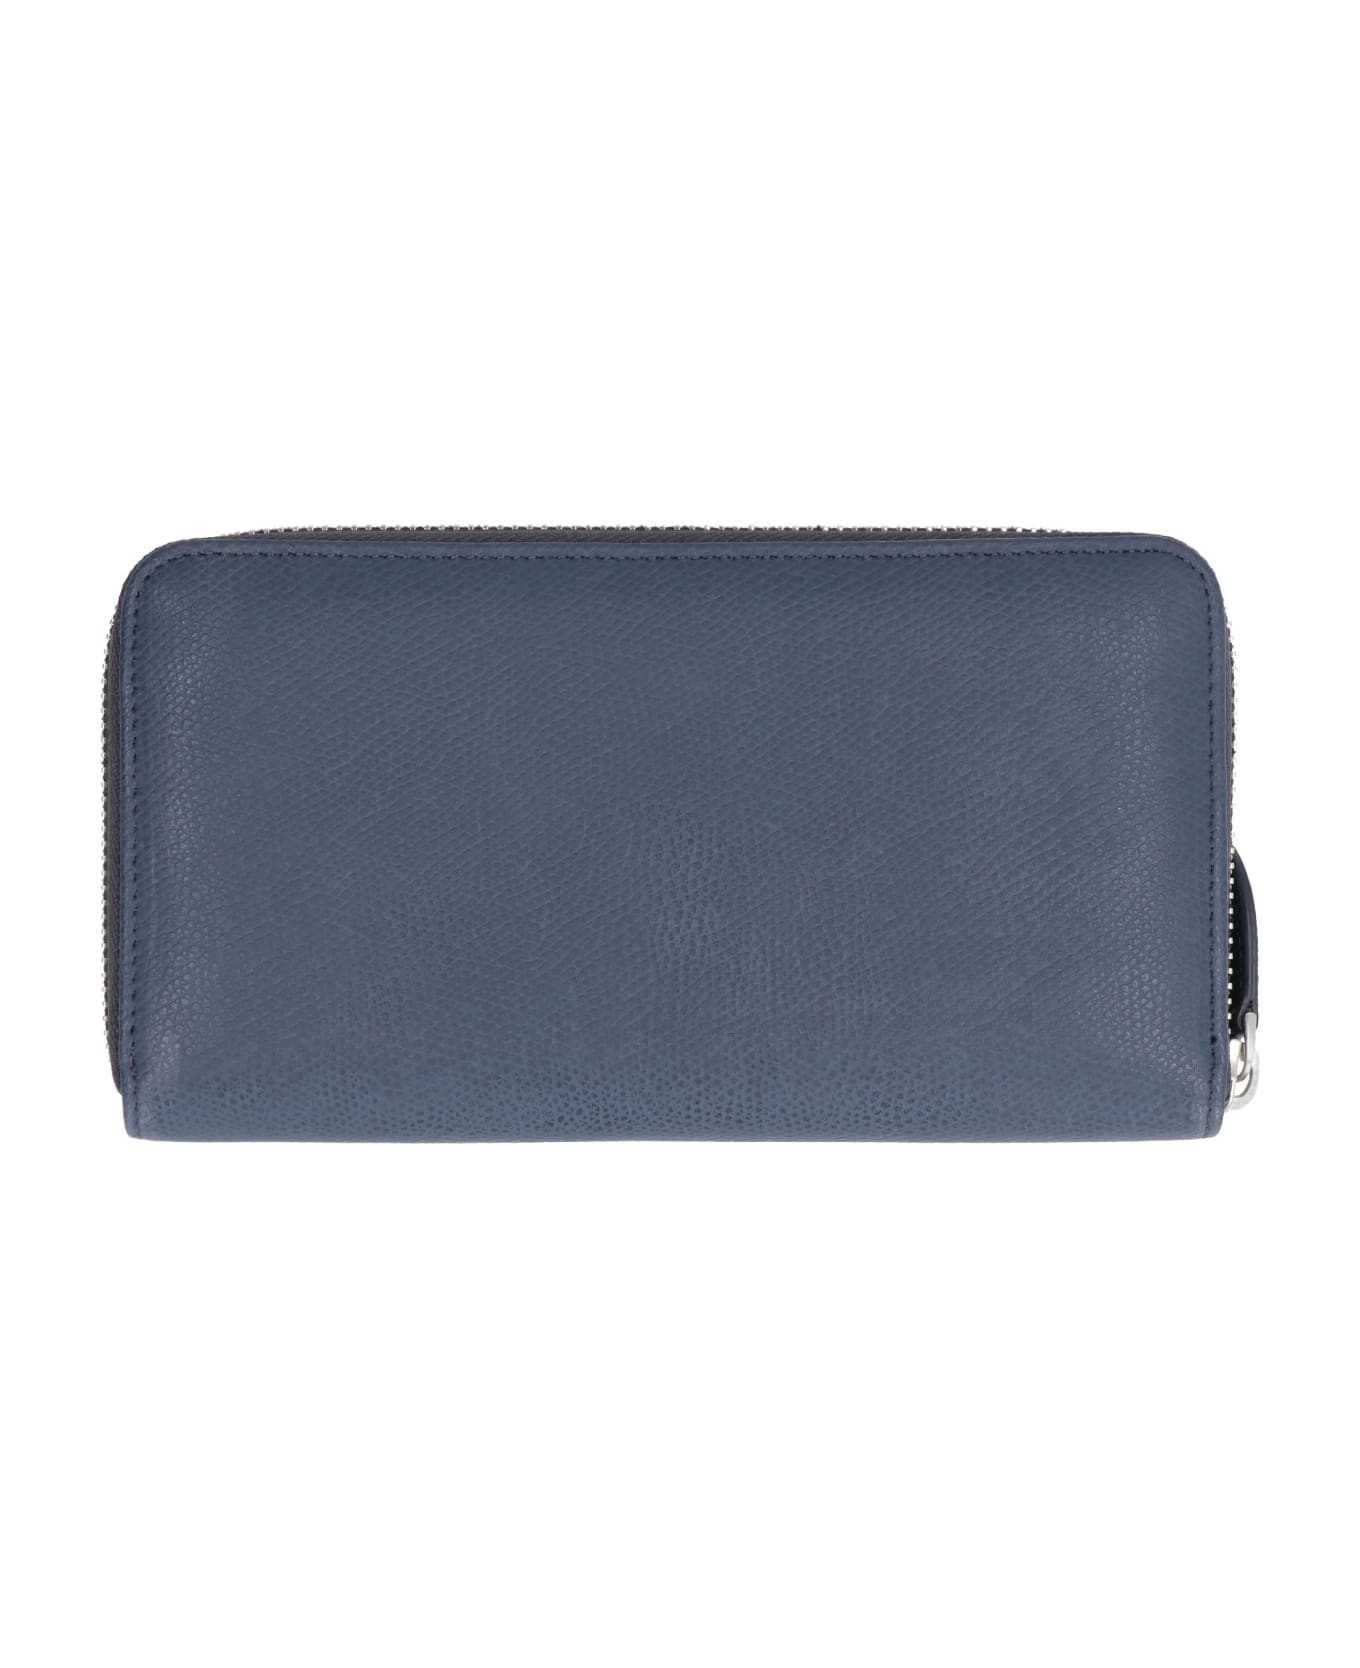 Emporio Armani Leather Zip Around Wallet - blue